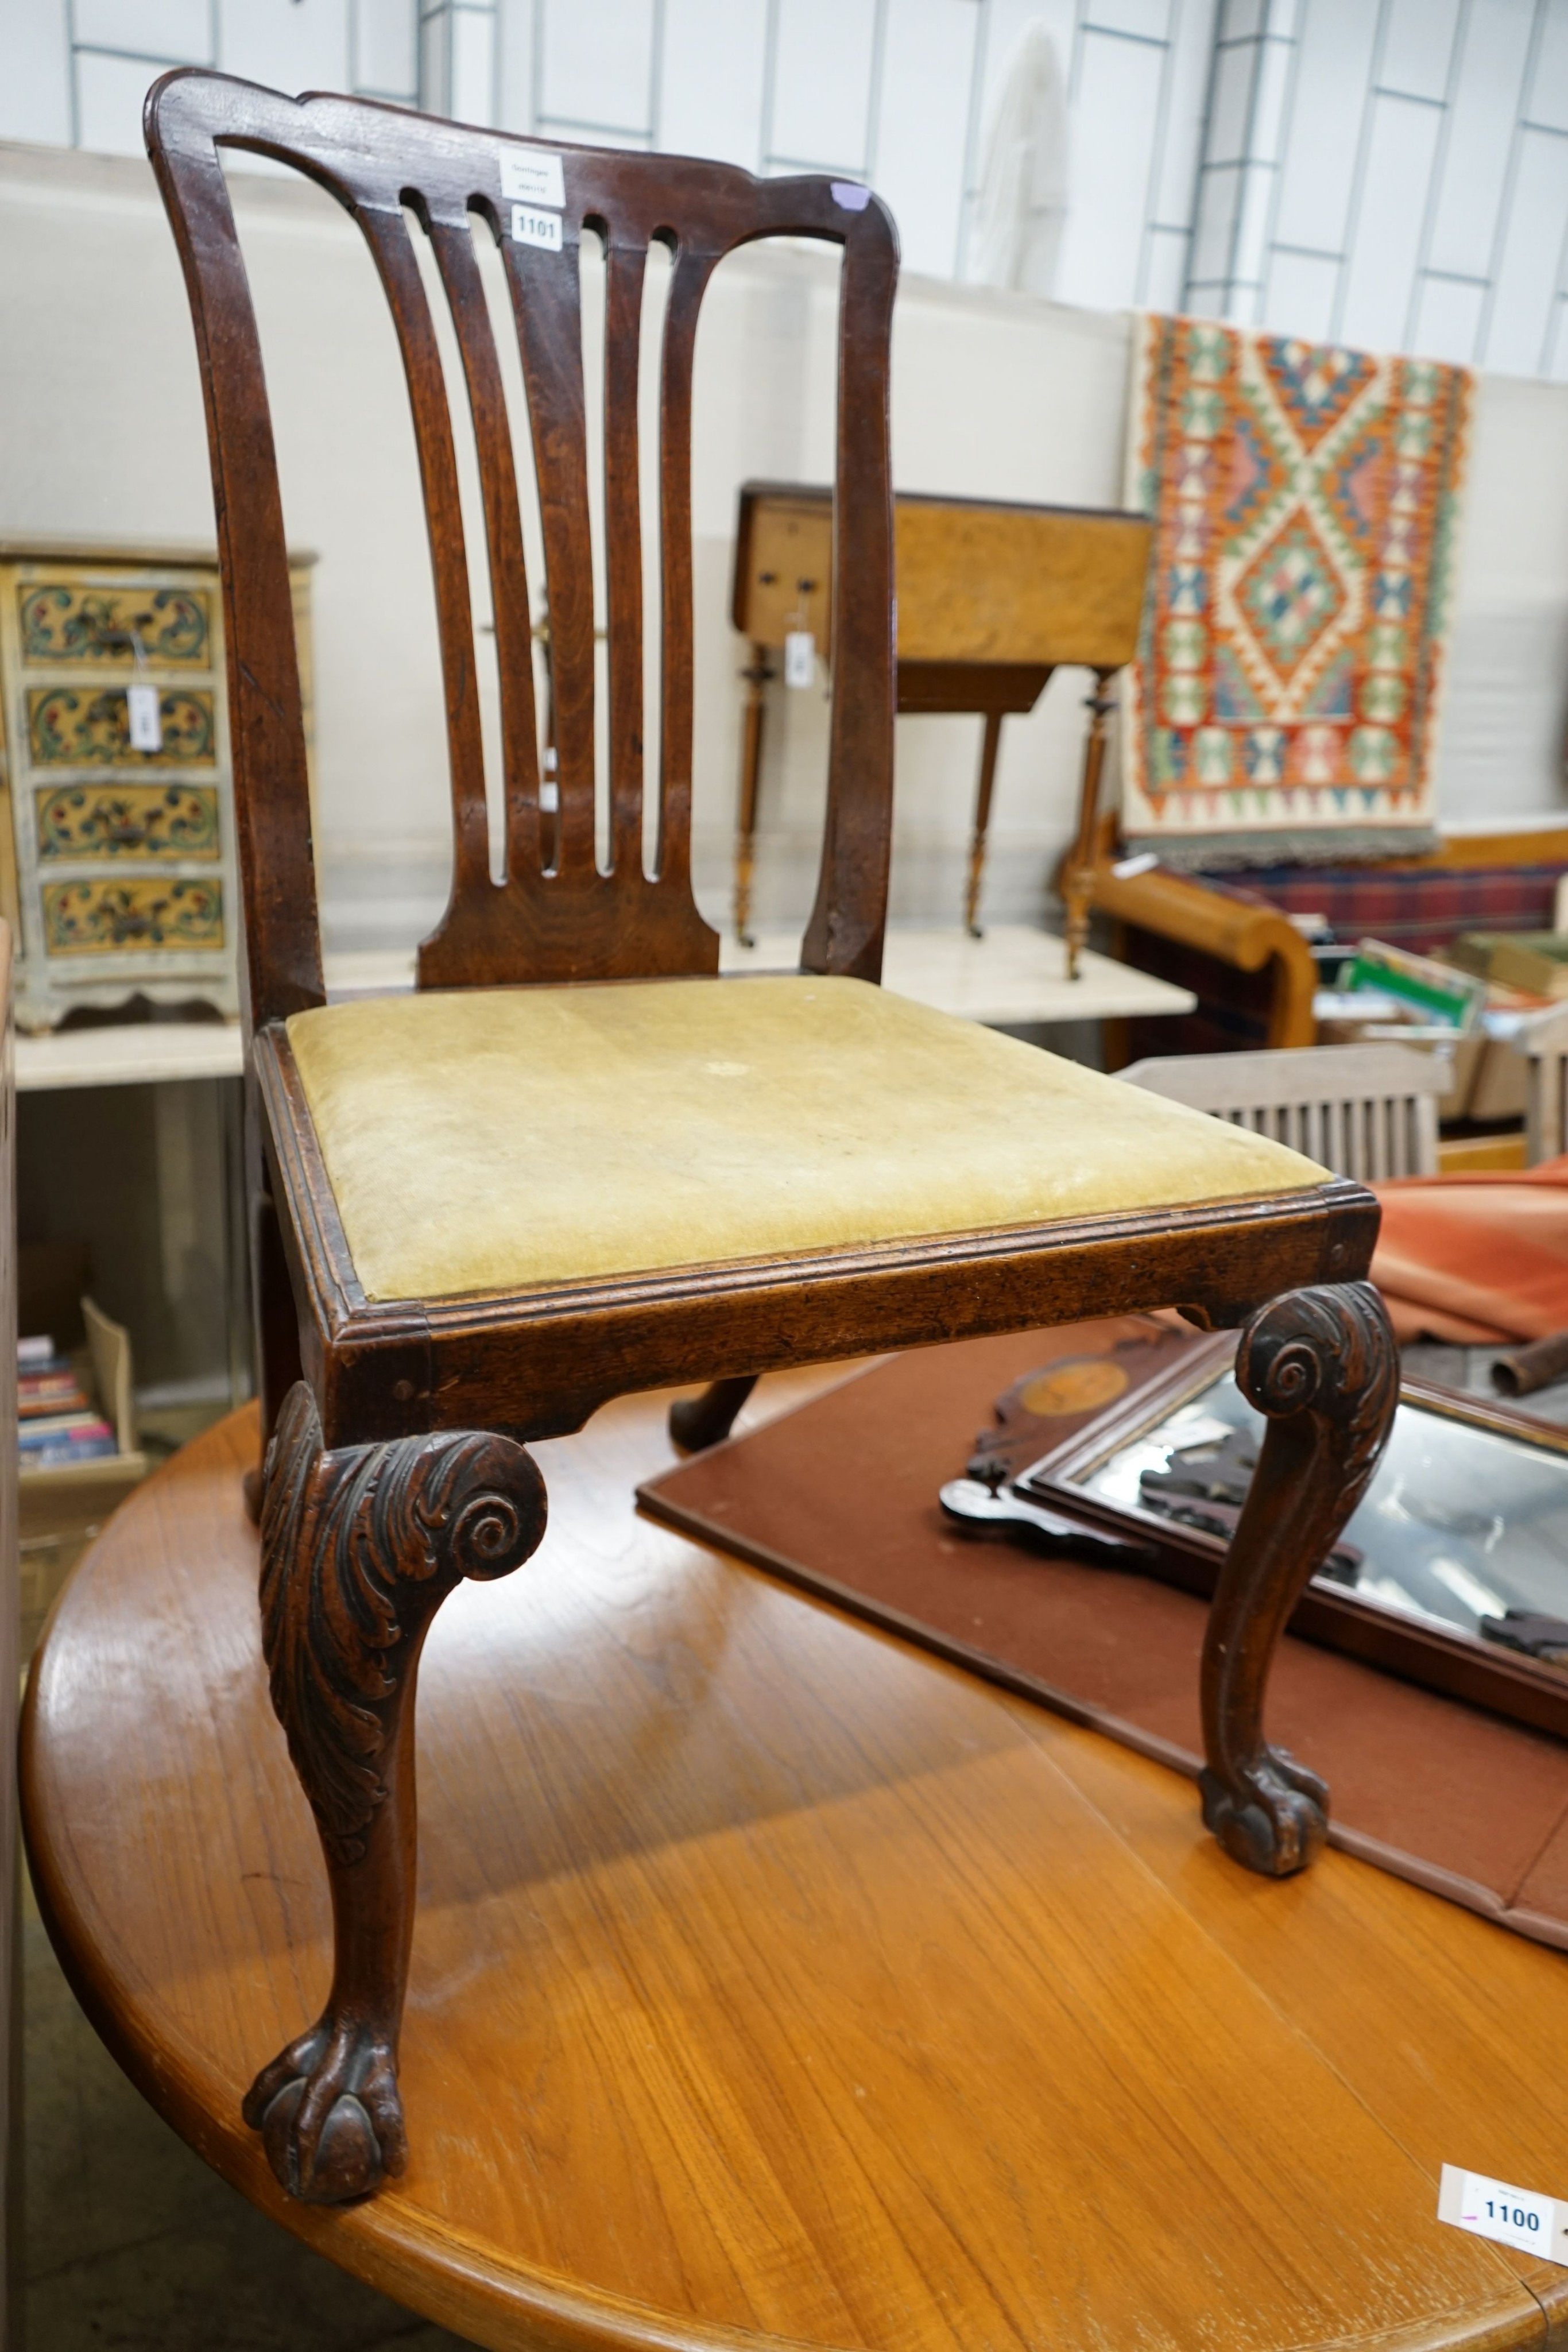 A George III mahogany dining chair